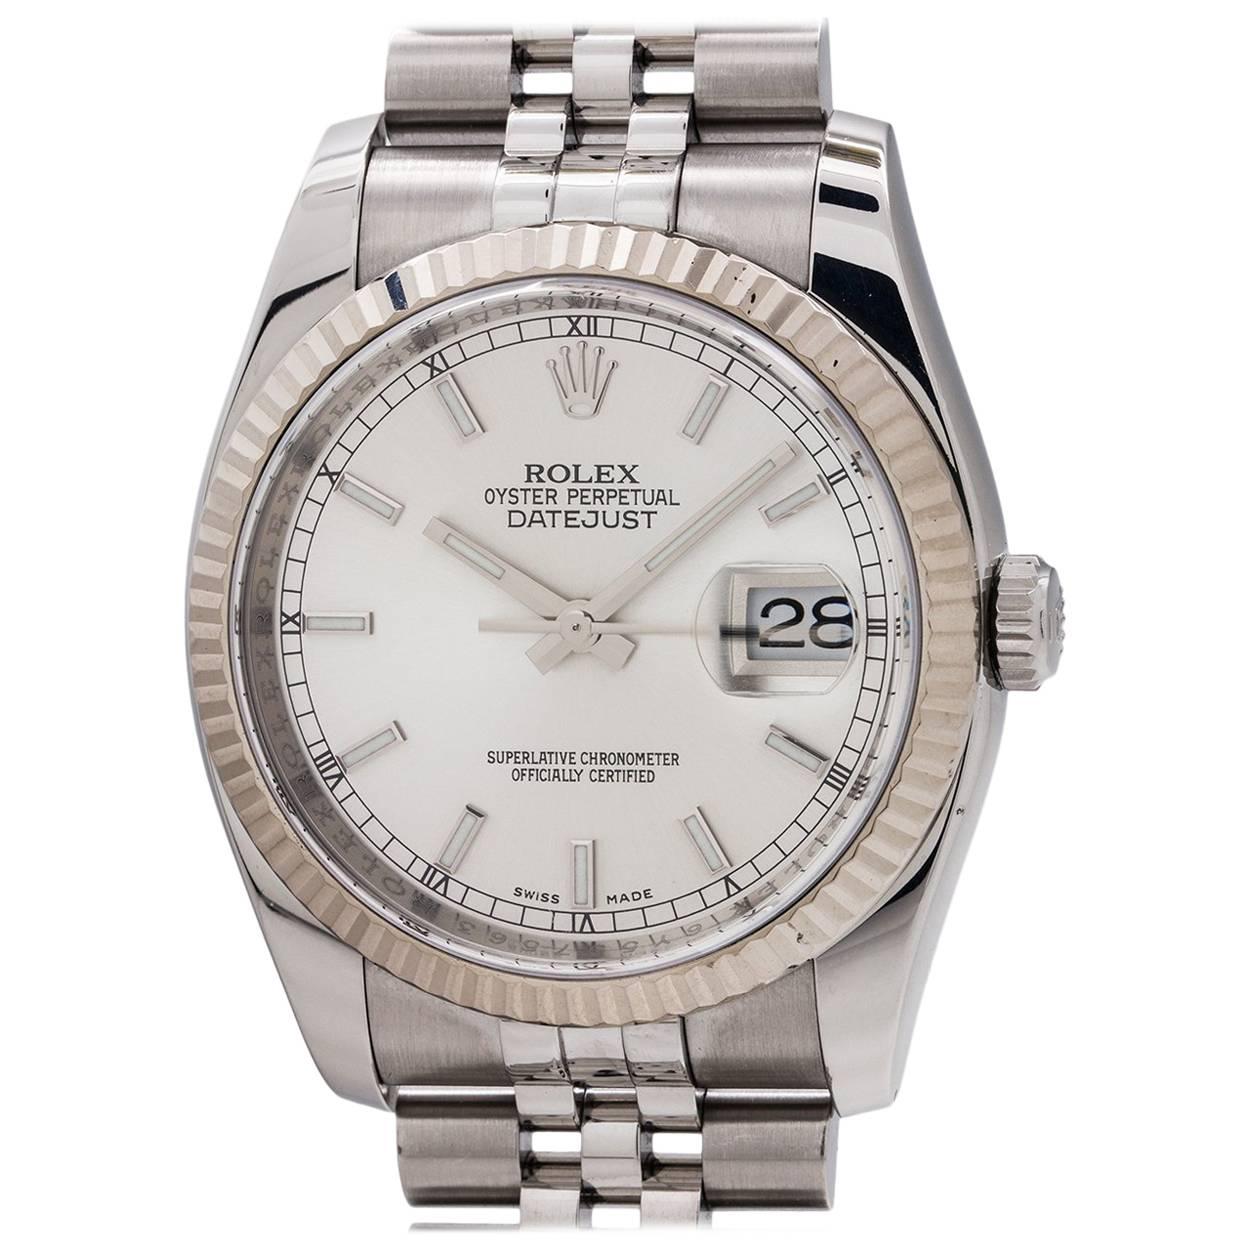 Rolex Stainless Steel Datejust self winding Wristwatch Ref 116234, circa 2010